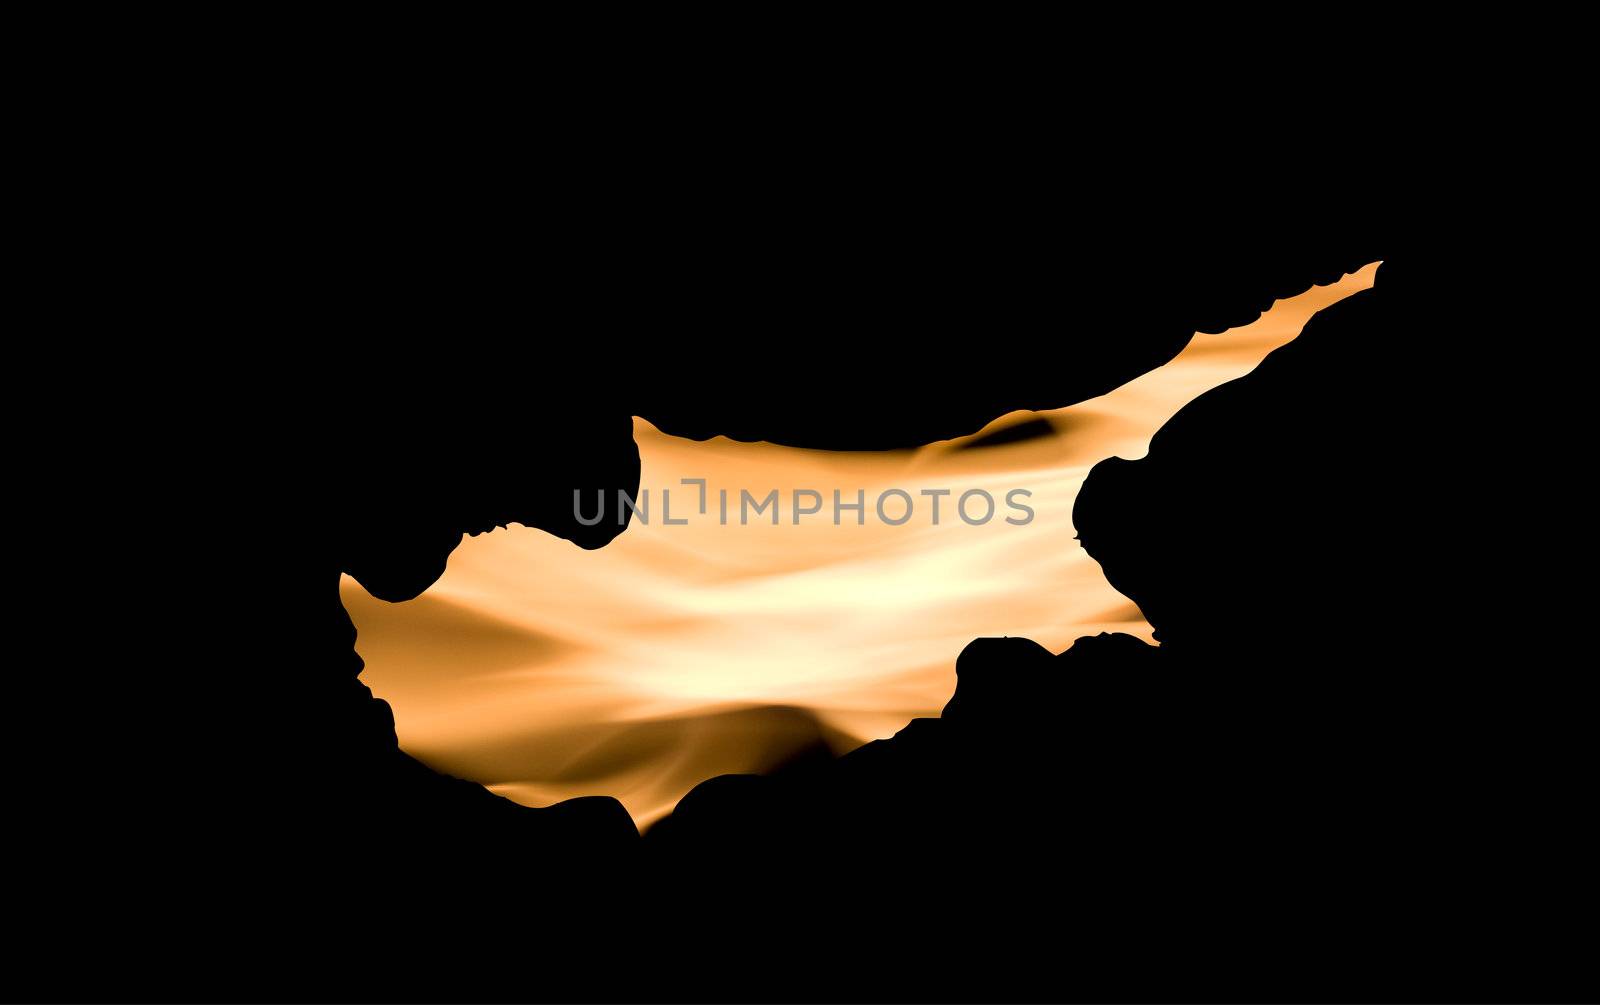 Cyprus under fire over black background